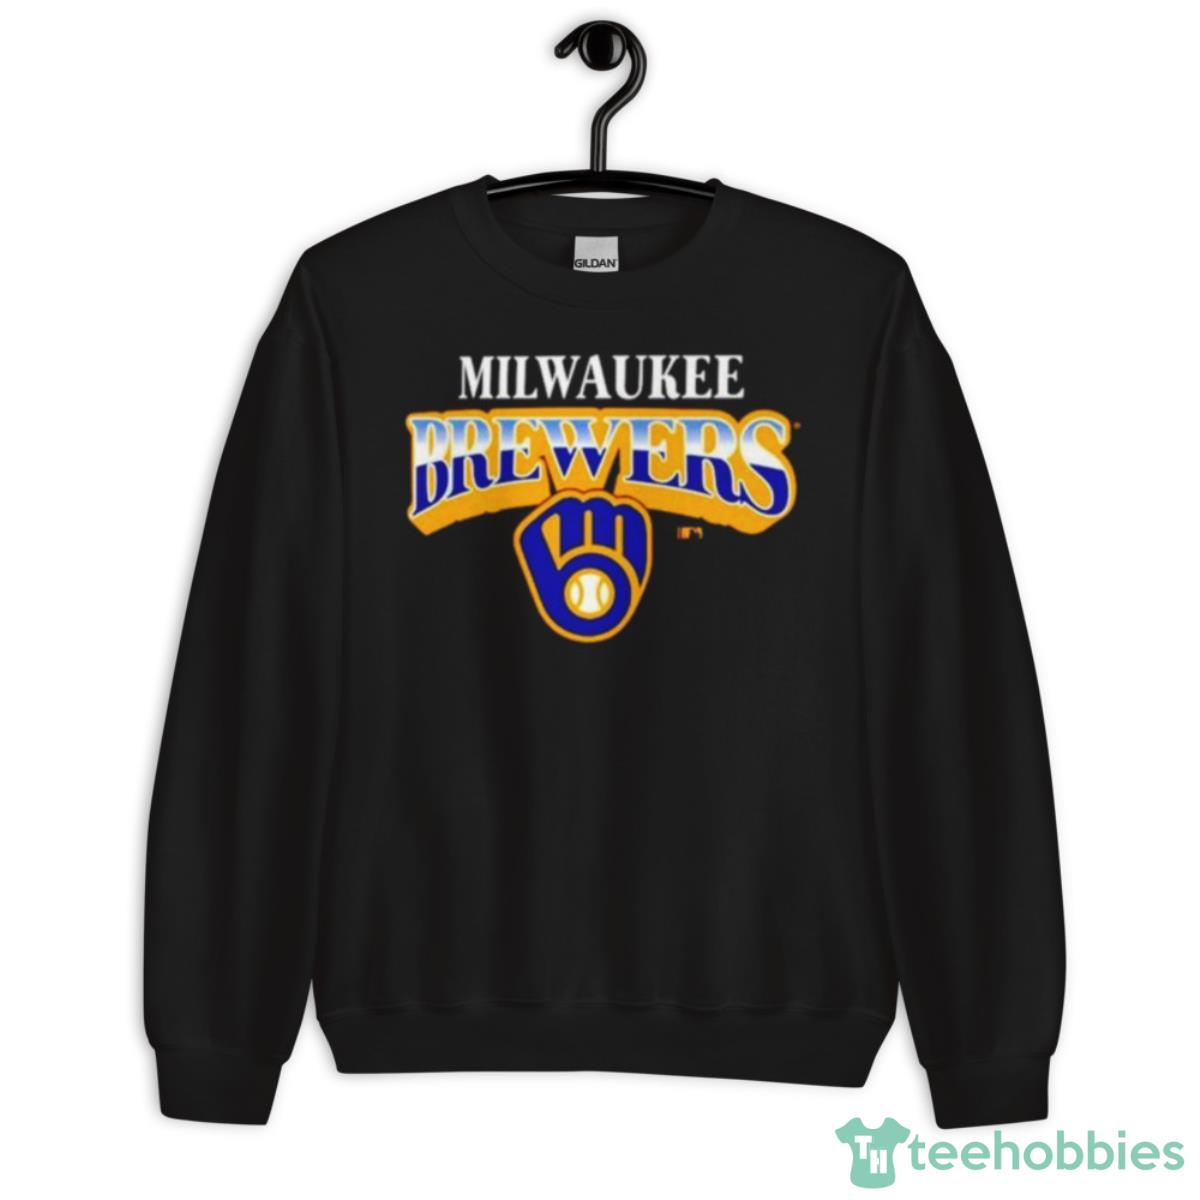 Milwaukee Brewers Cooperstown Shirt - Unisex Crewneck Sweatshirt